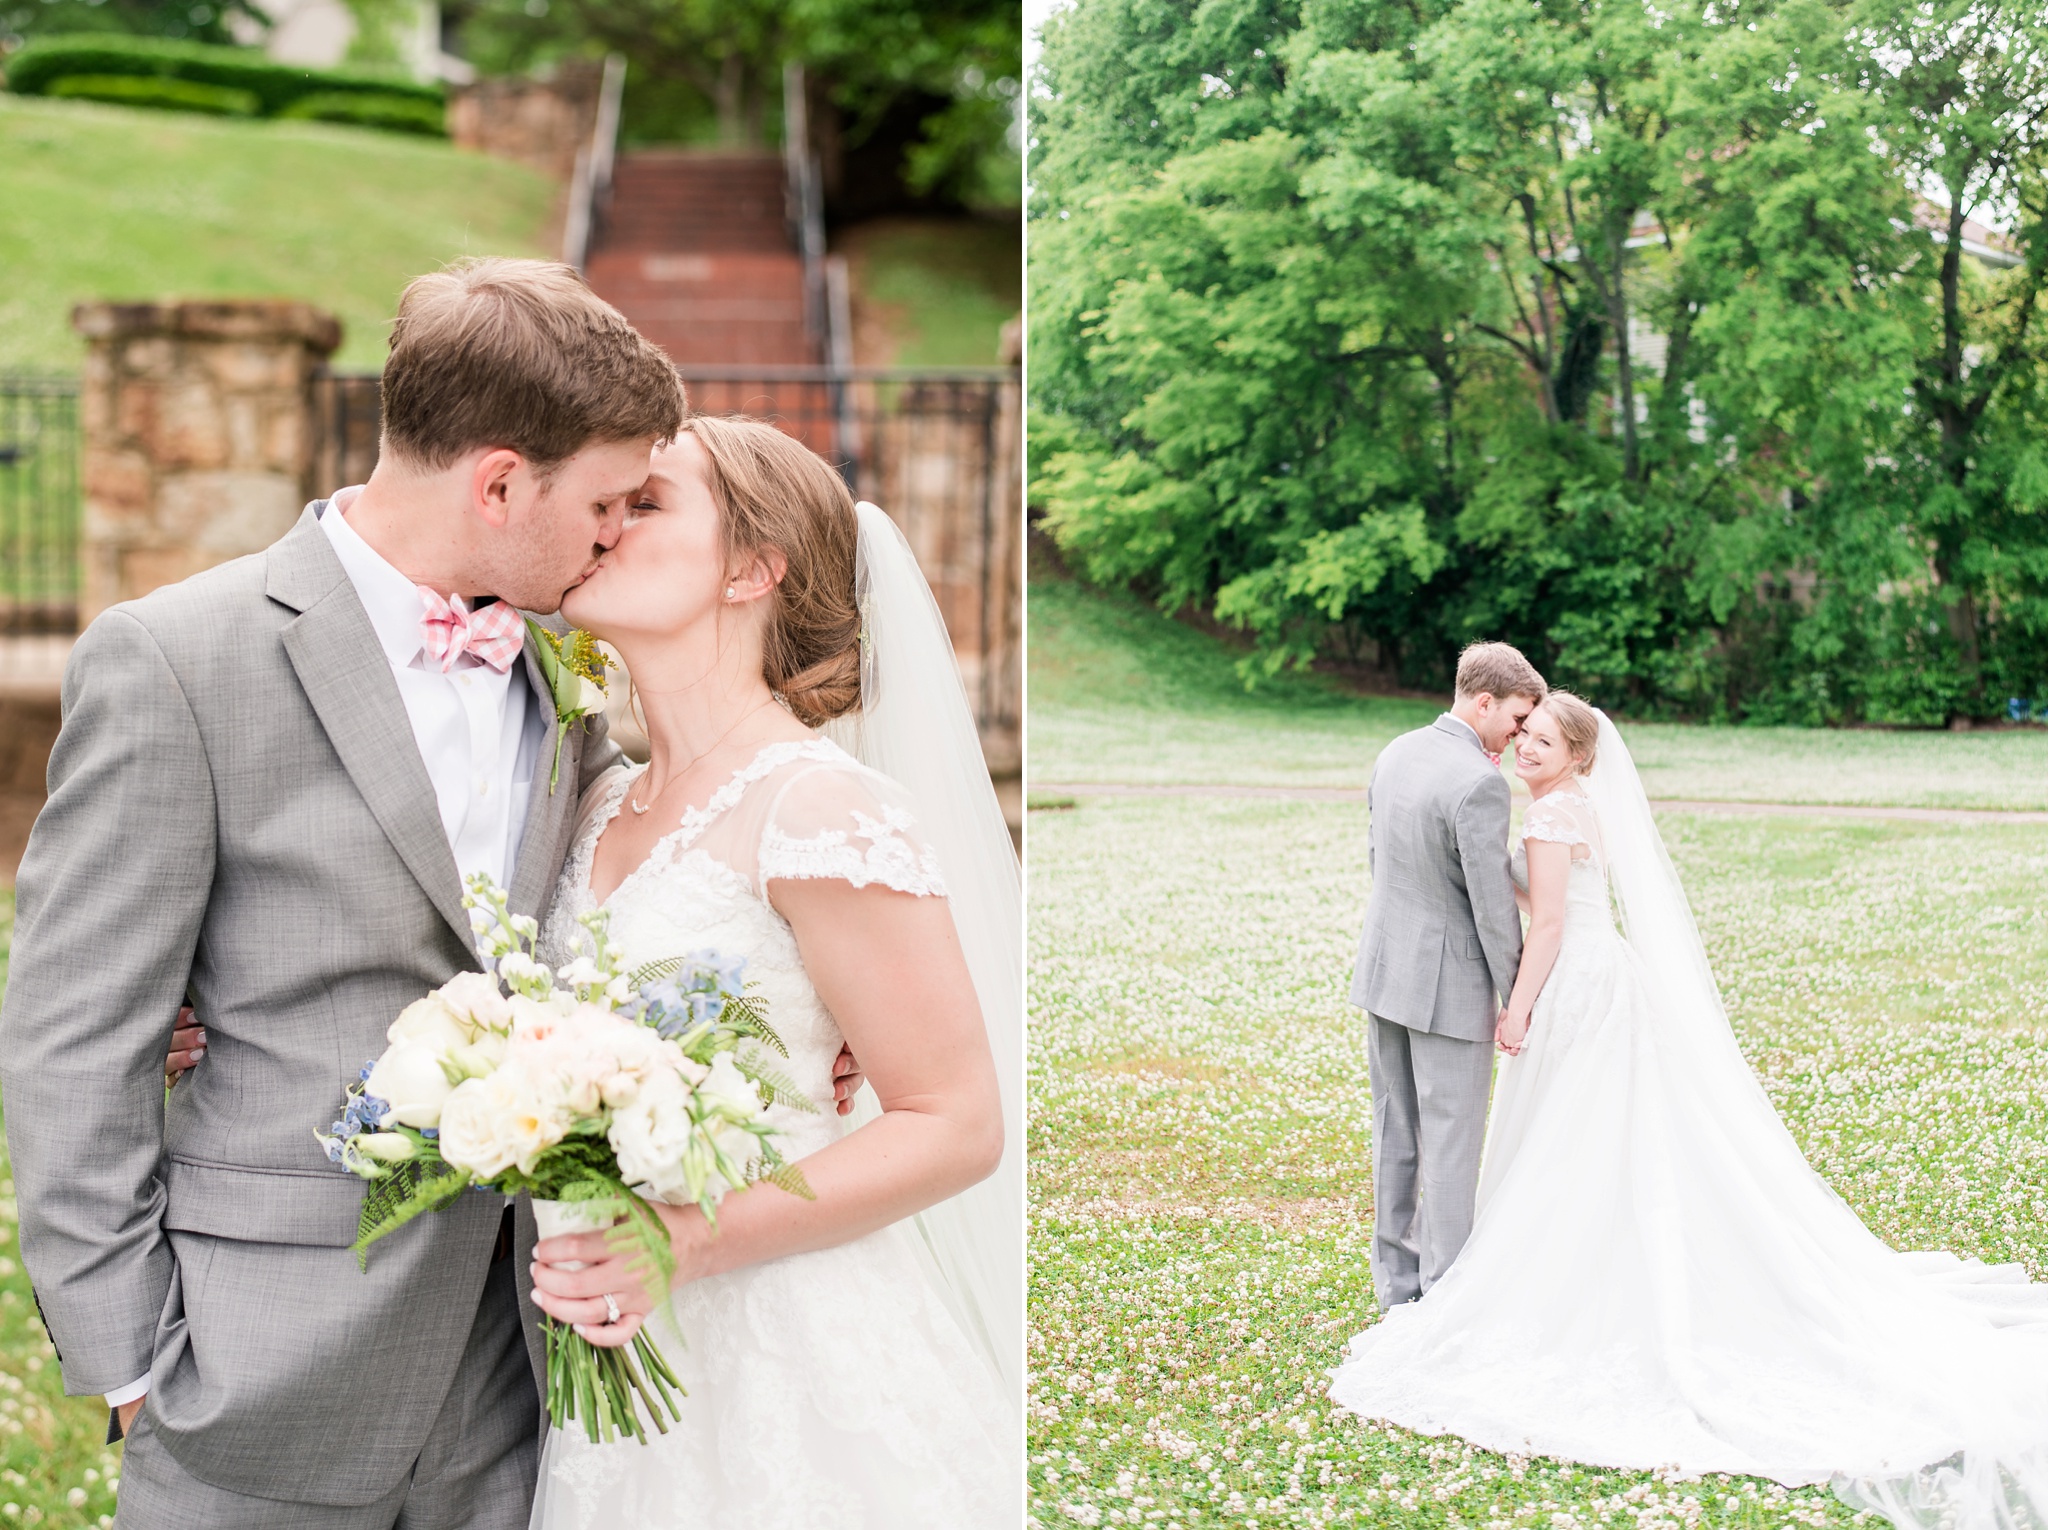 Briarwood Caroline House Blush Spring Garden Wedding | Birmingham Alabama Wedding Photographers_0052.jpg